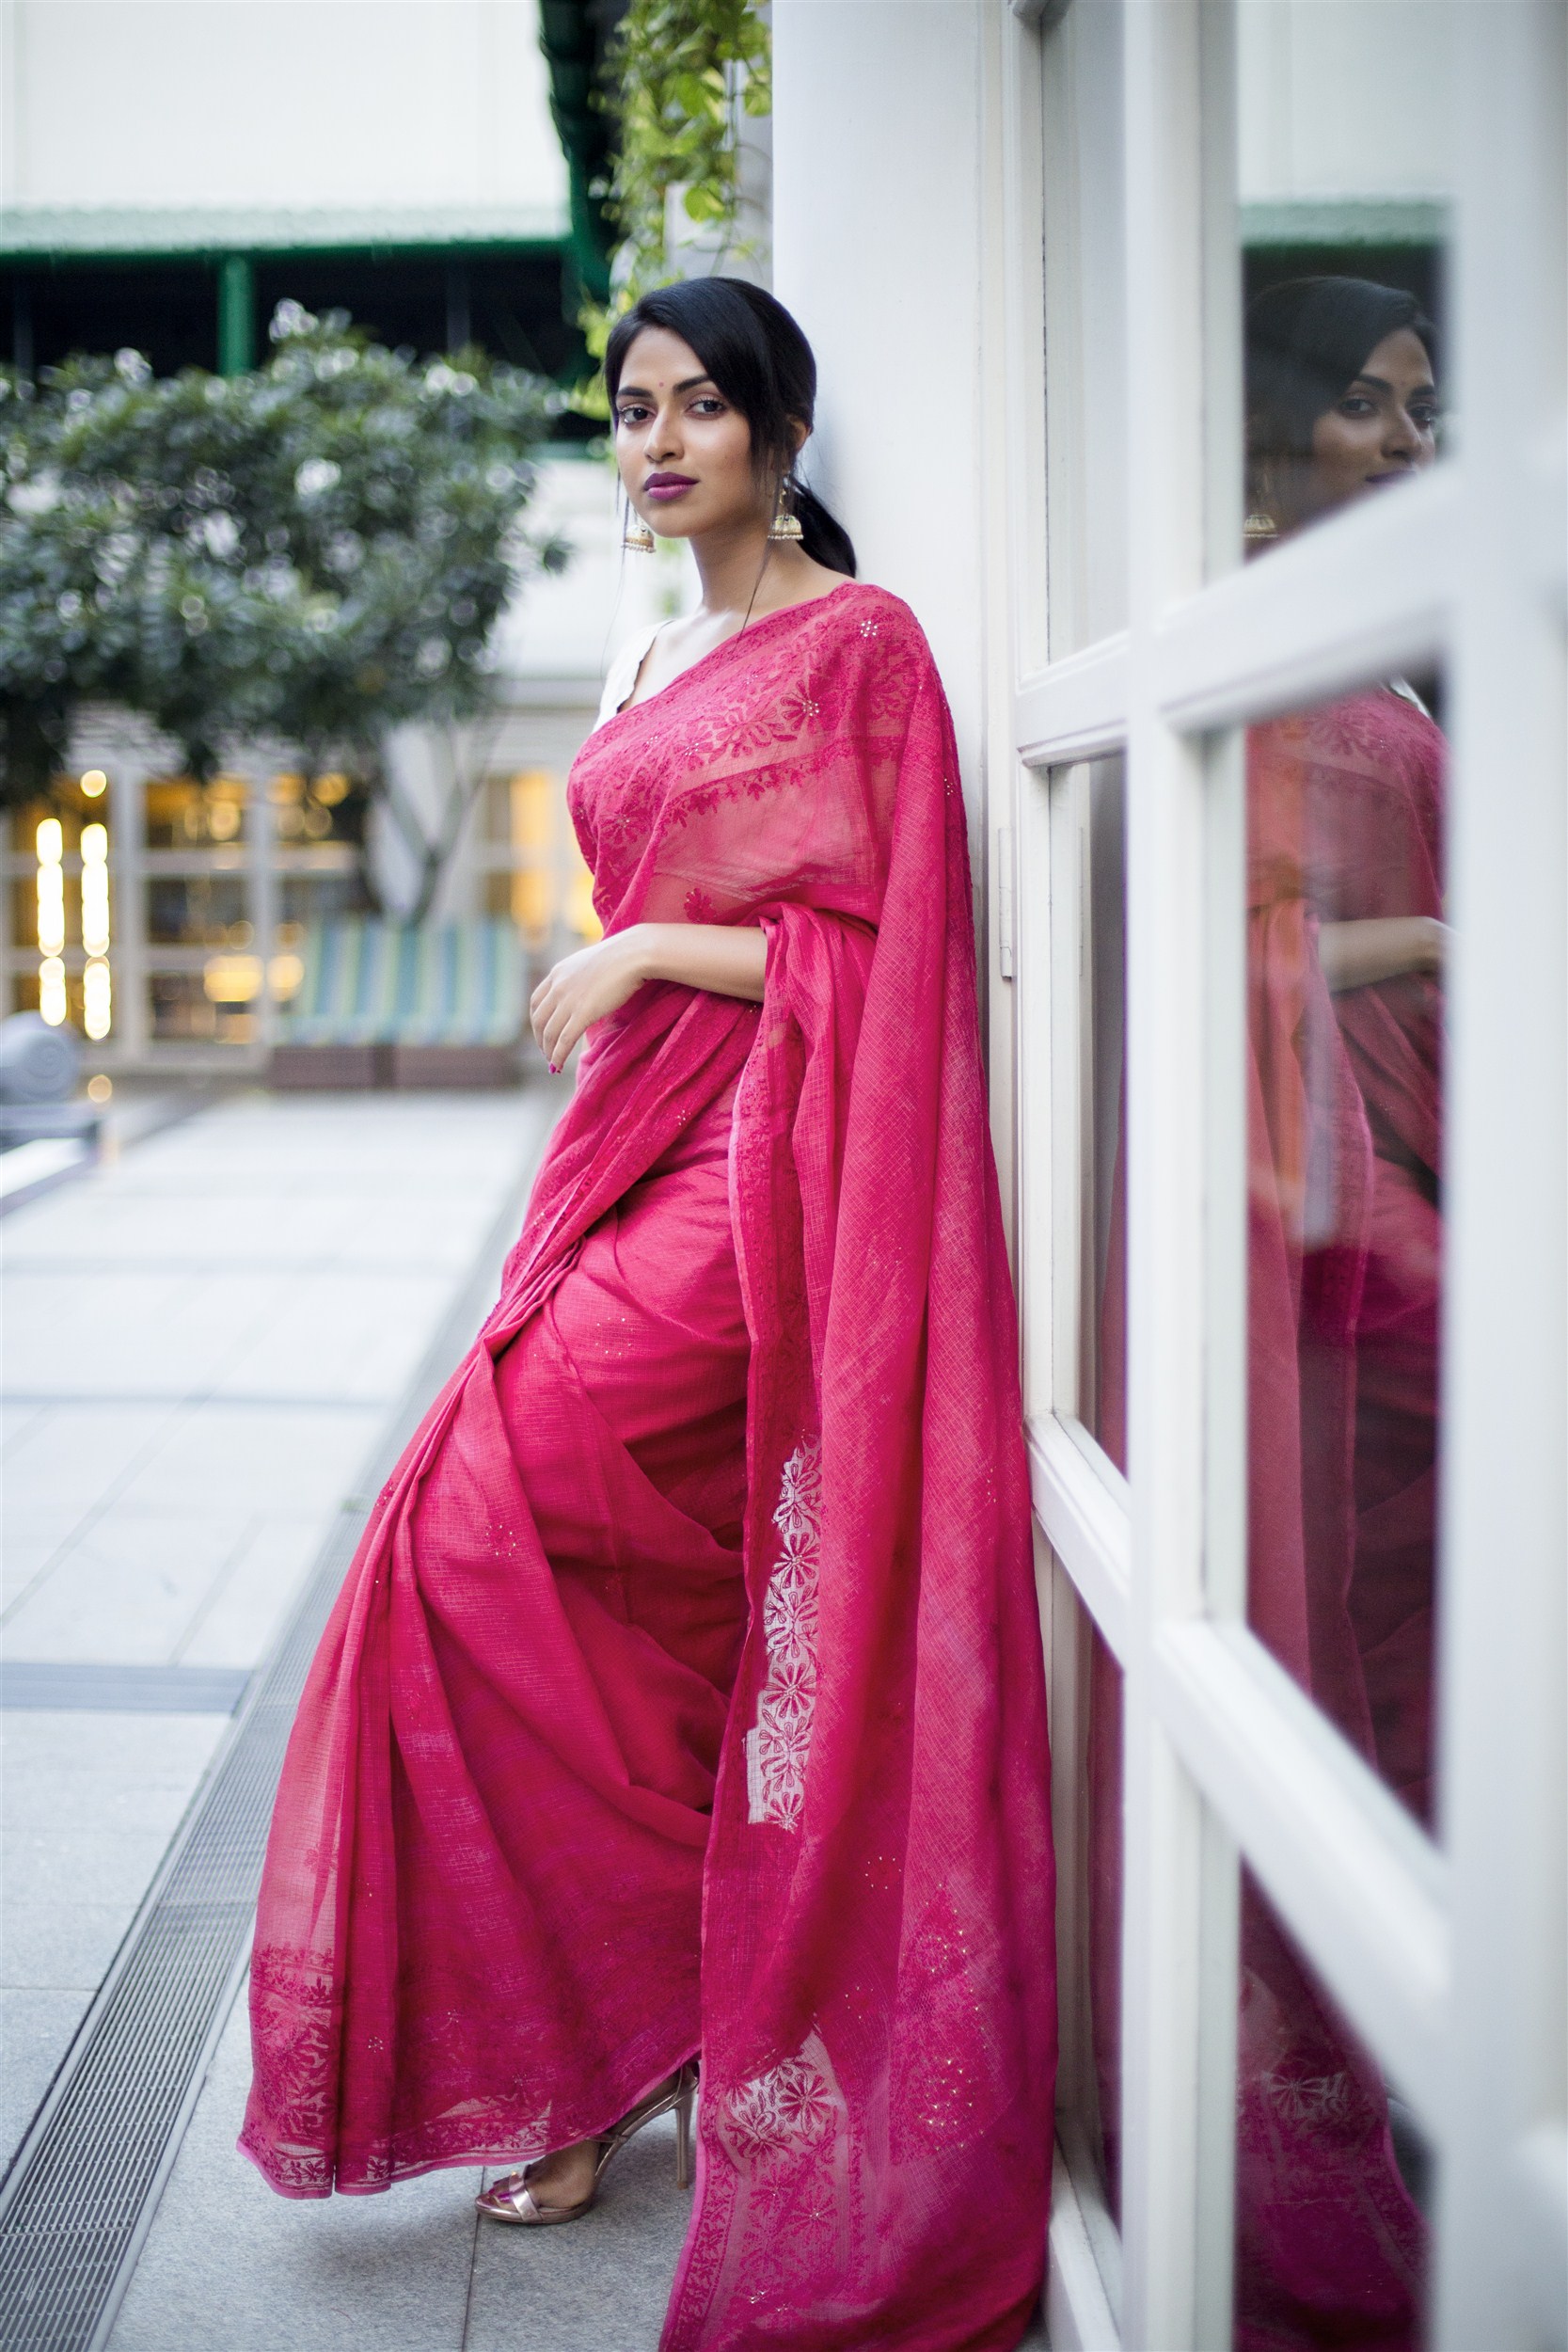 Amala Paul's Diwali look in pink saree